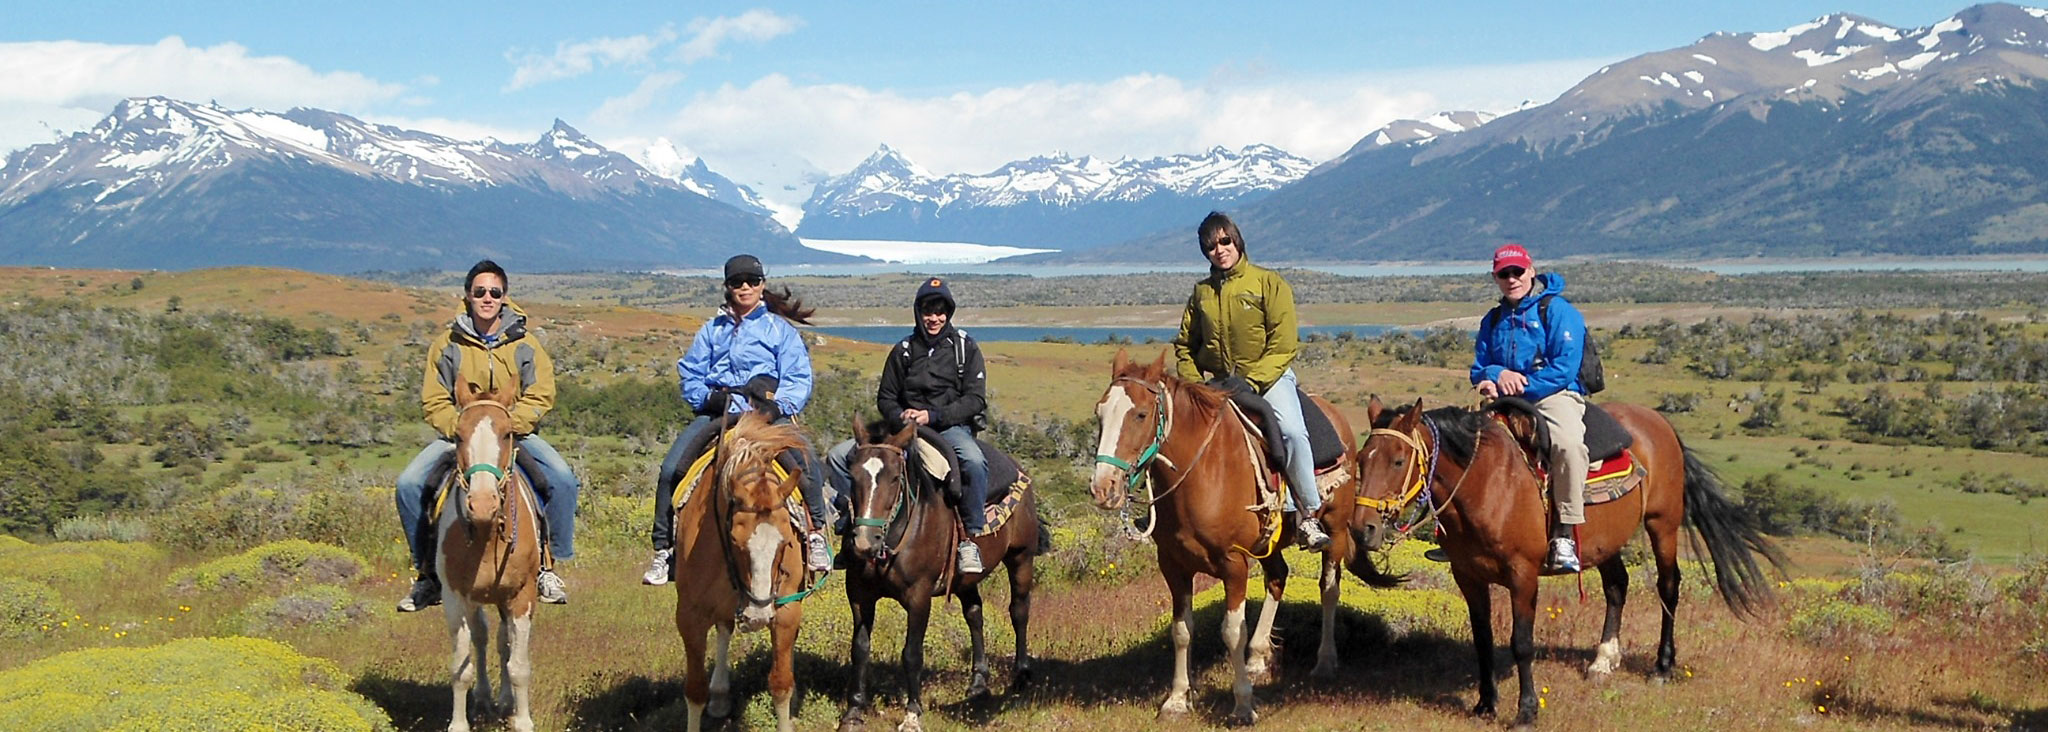 Cabalgatas del Glaciar - Provider in Patagonia Argentina